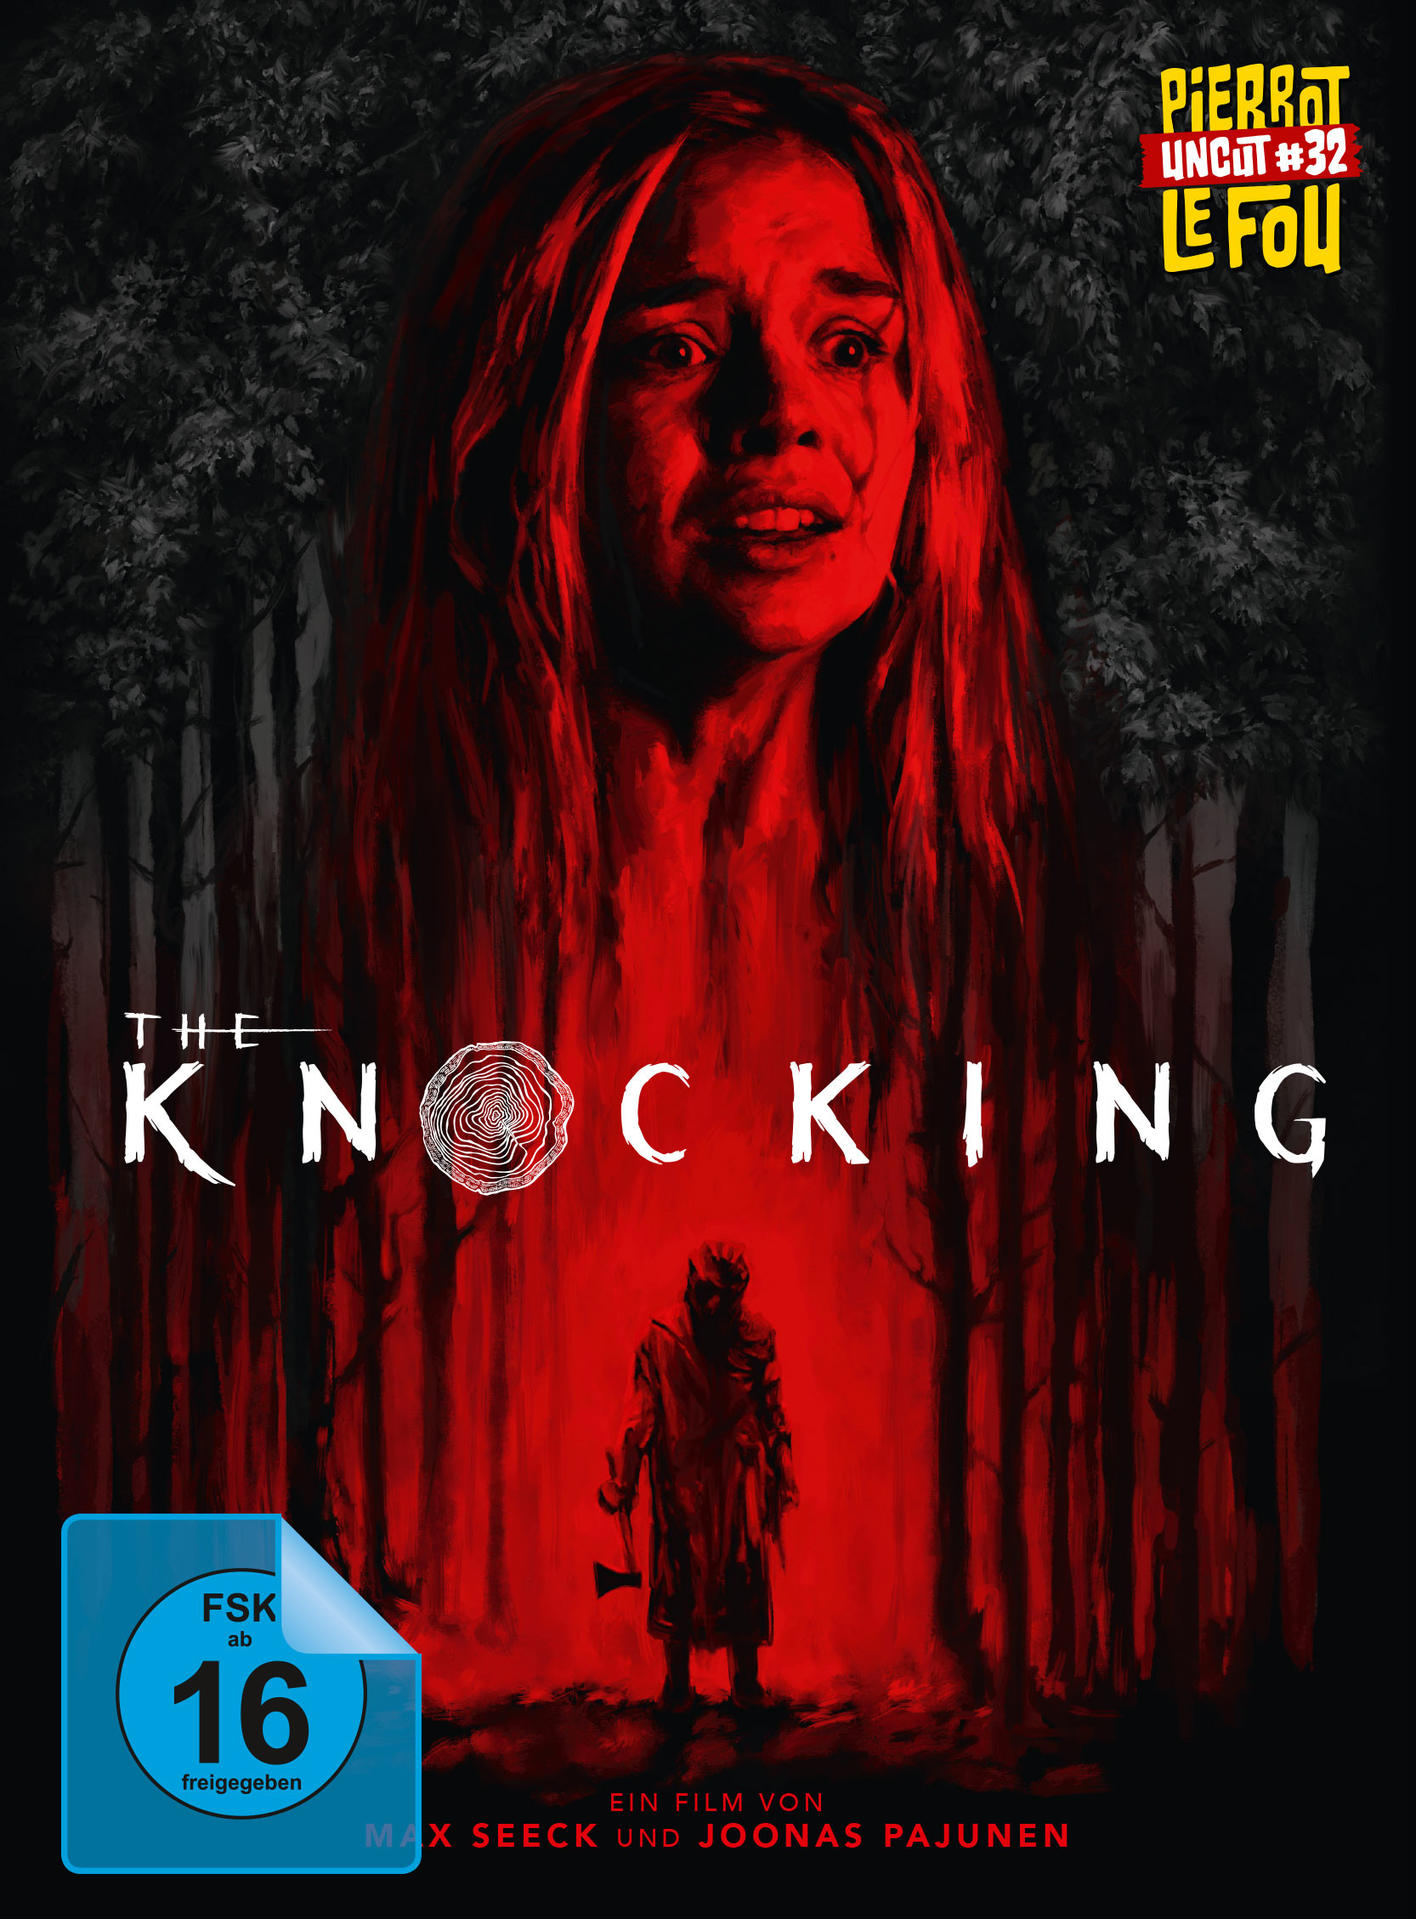 + Edition (uncut) Knocking-Limitierte Blu-ray Mediabook DVD The